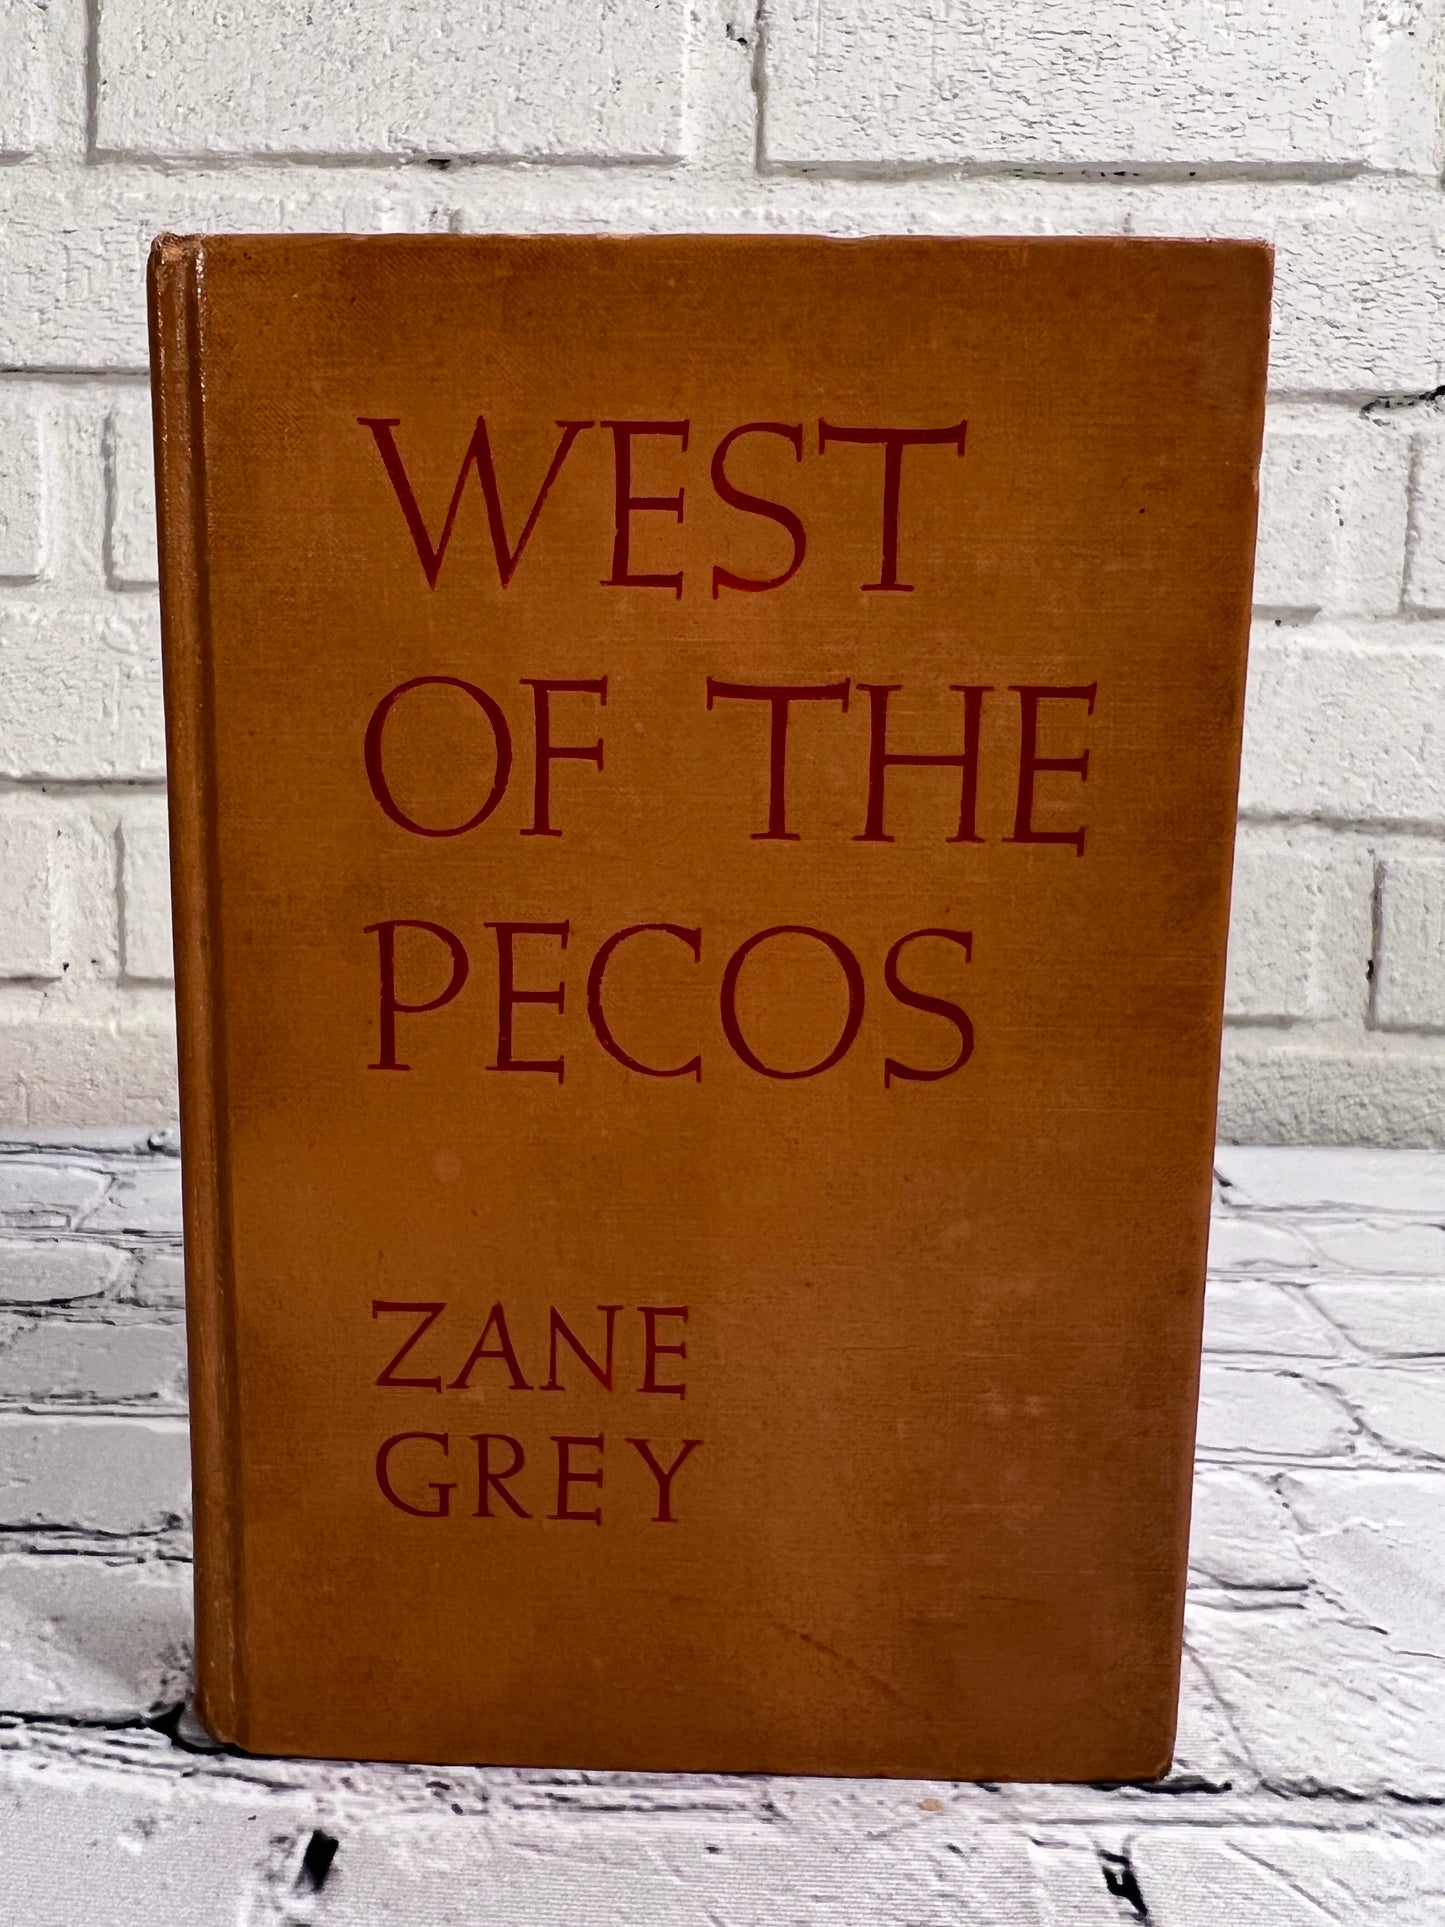 West of the Pecos by Zane Grey [1937]